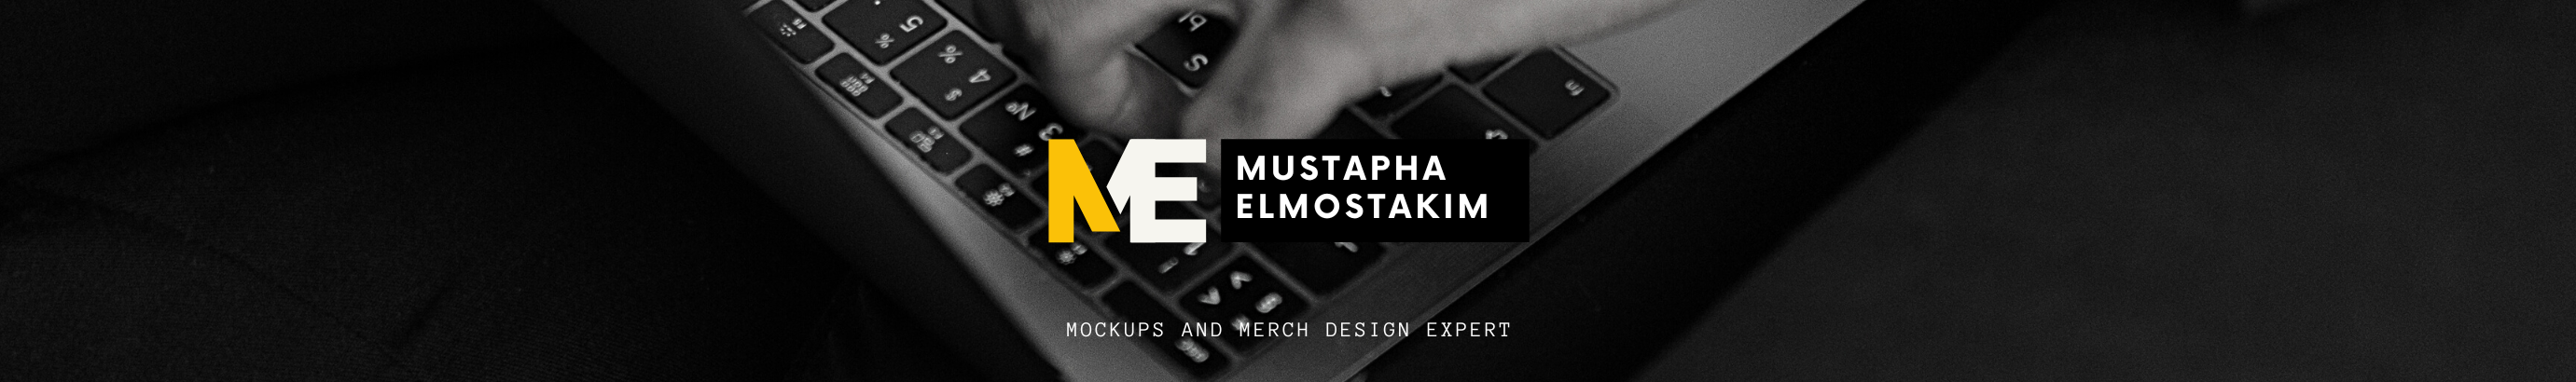 Mustapha Elmostakim's profile banner